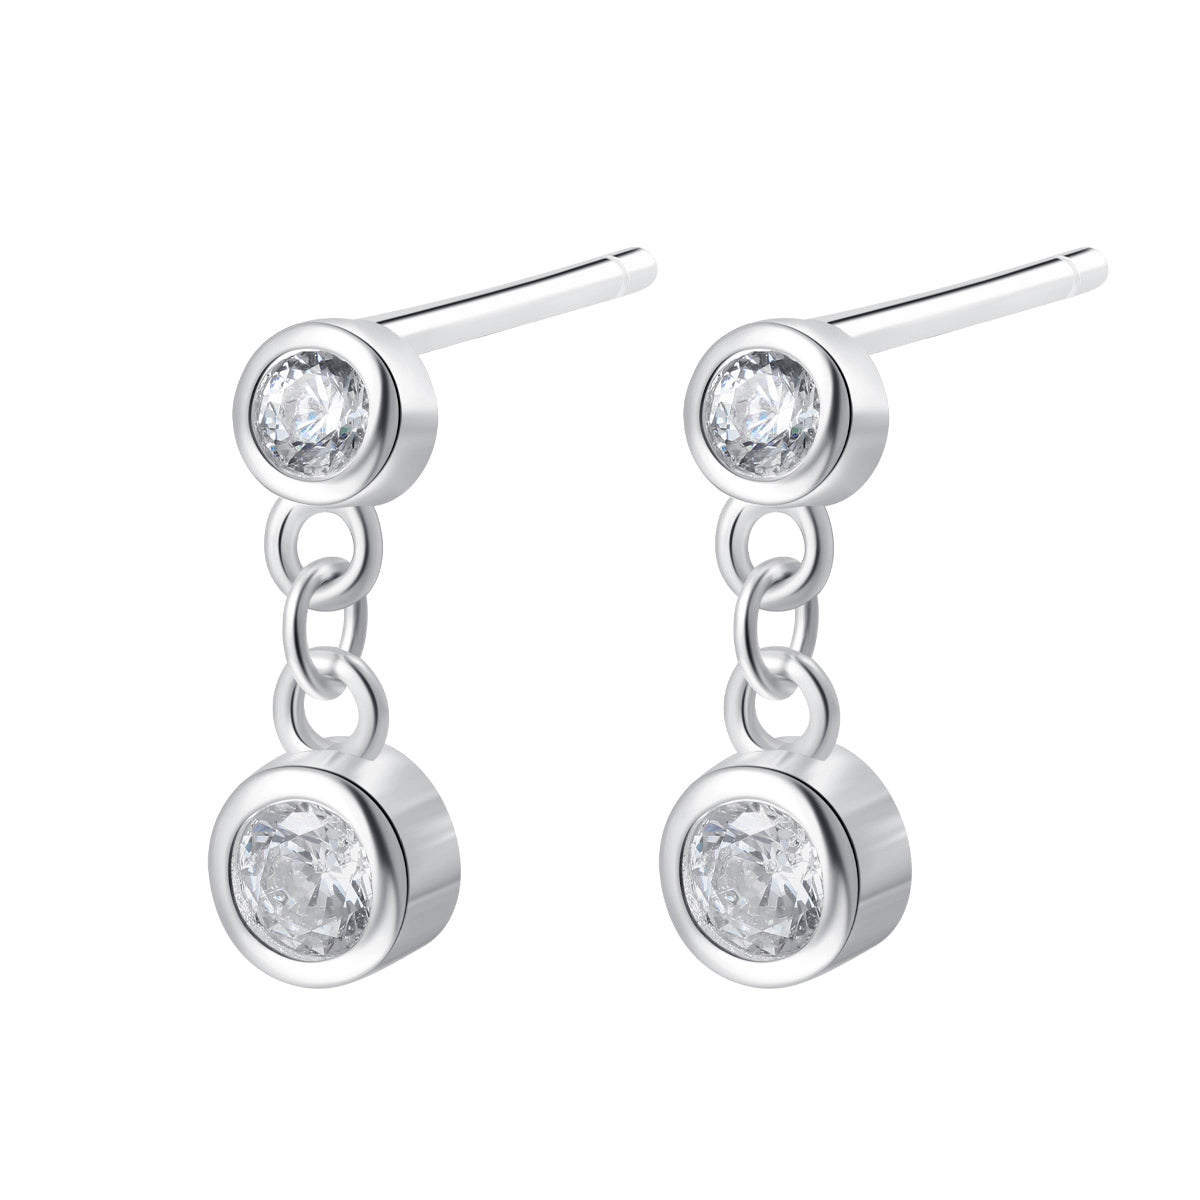 Two Orbs Stud Earrings Sterling Silver